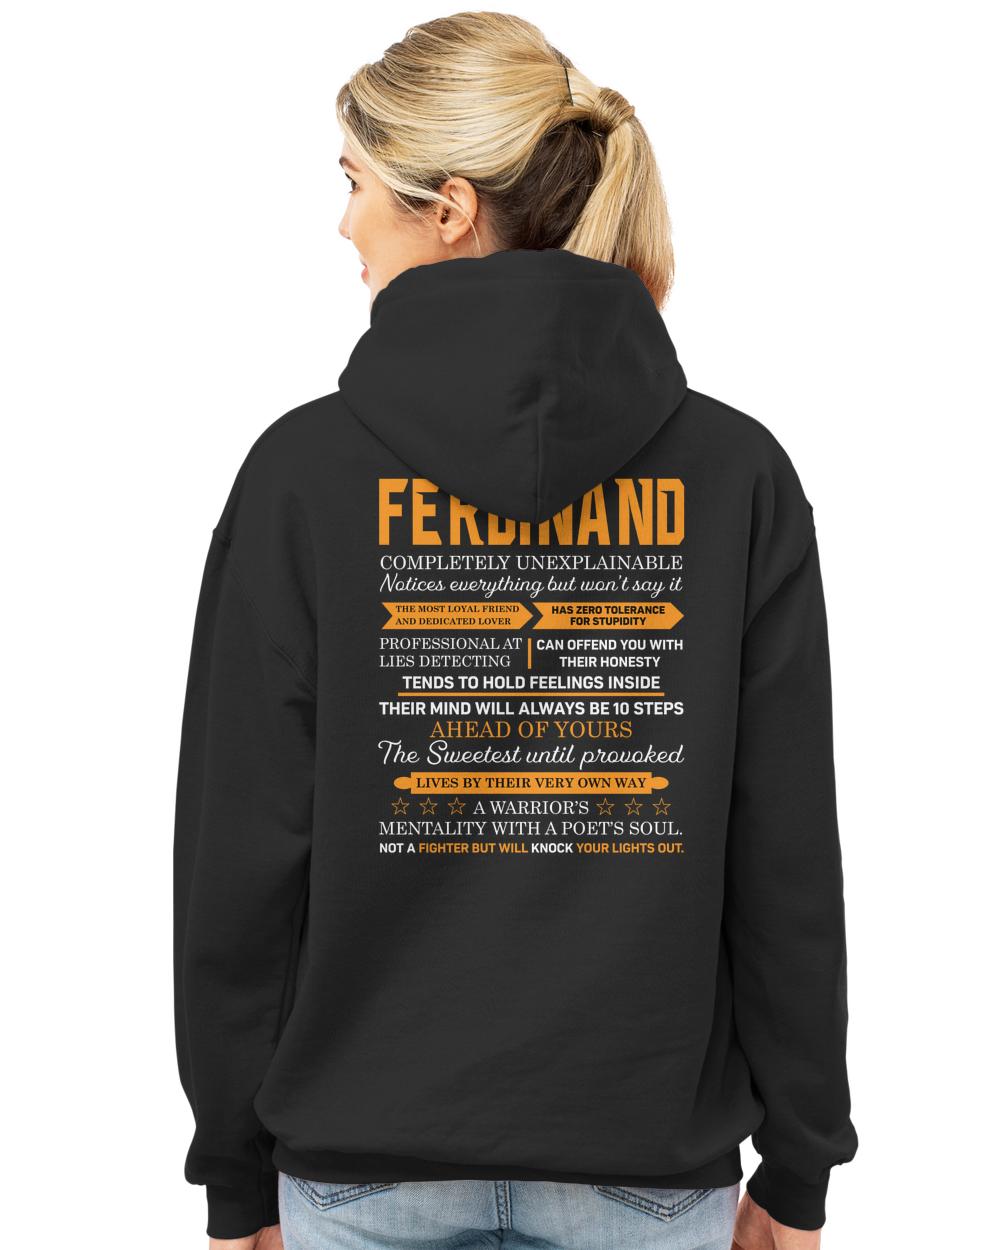 FERDINAND-13K-N1-01